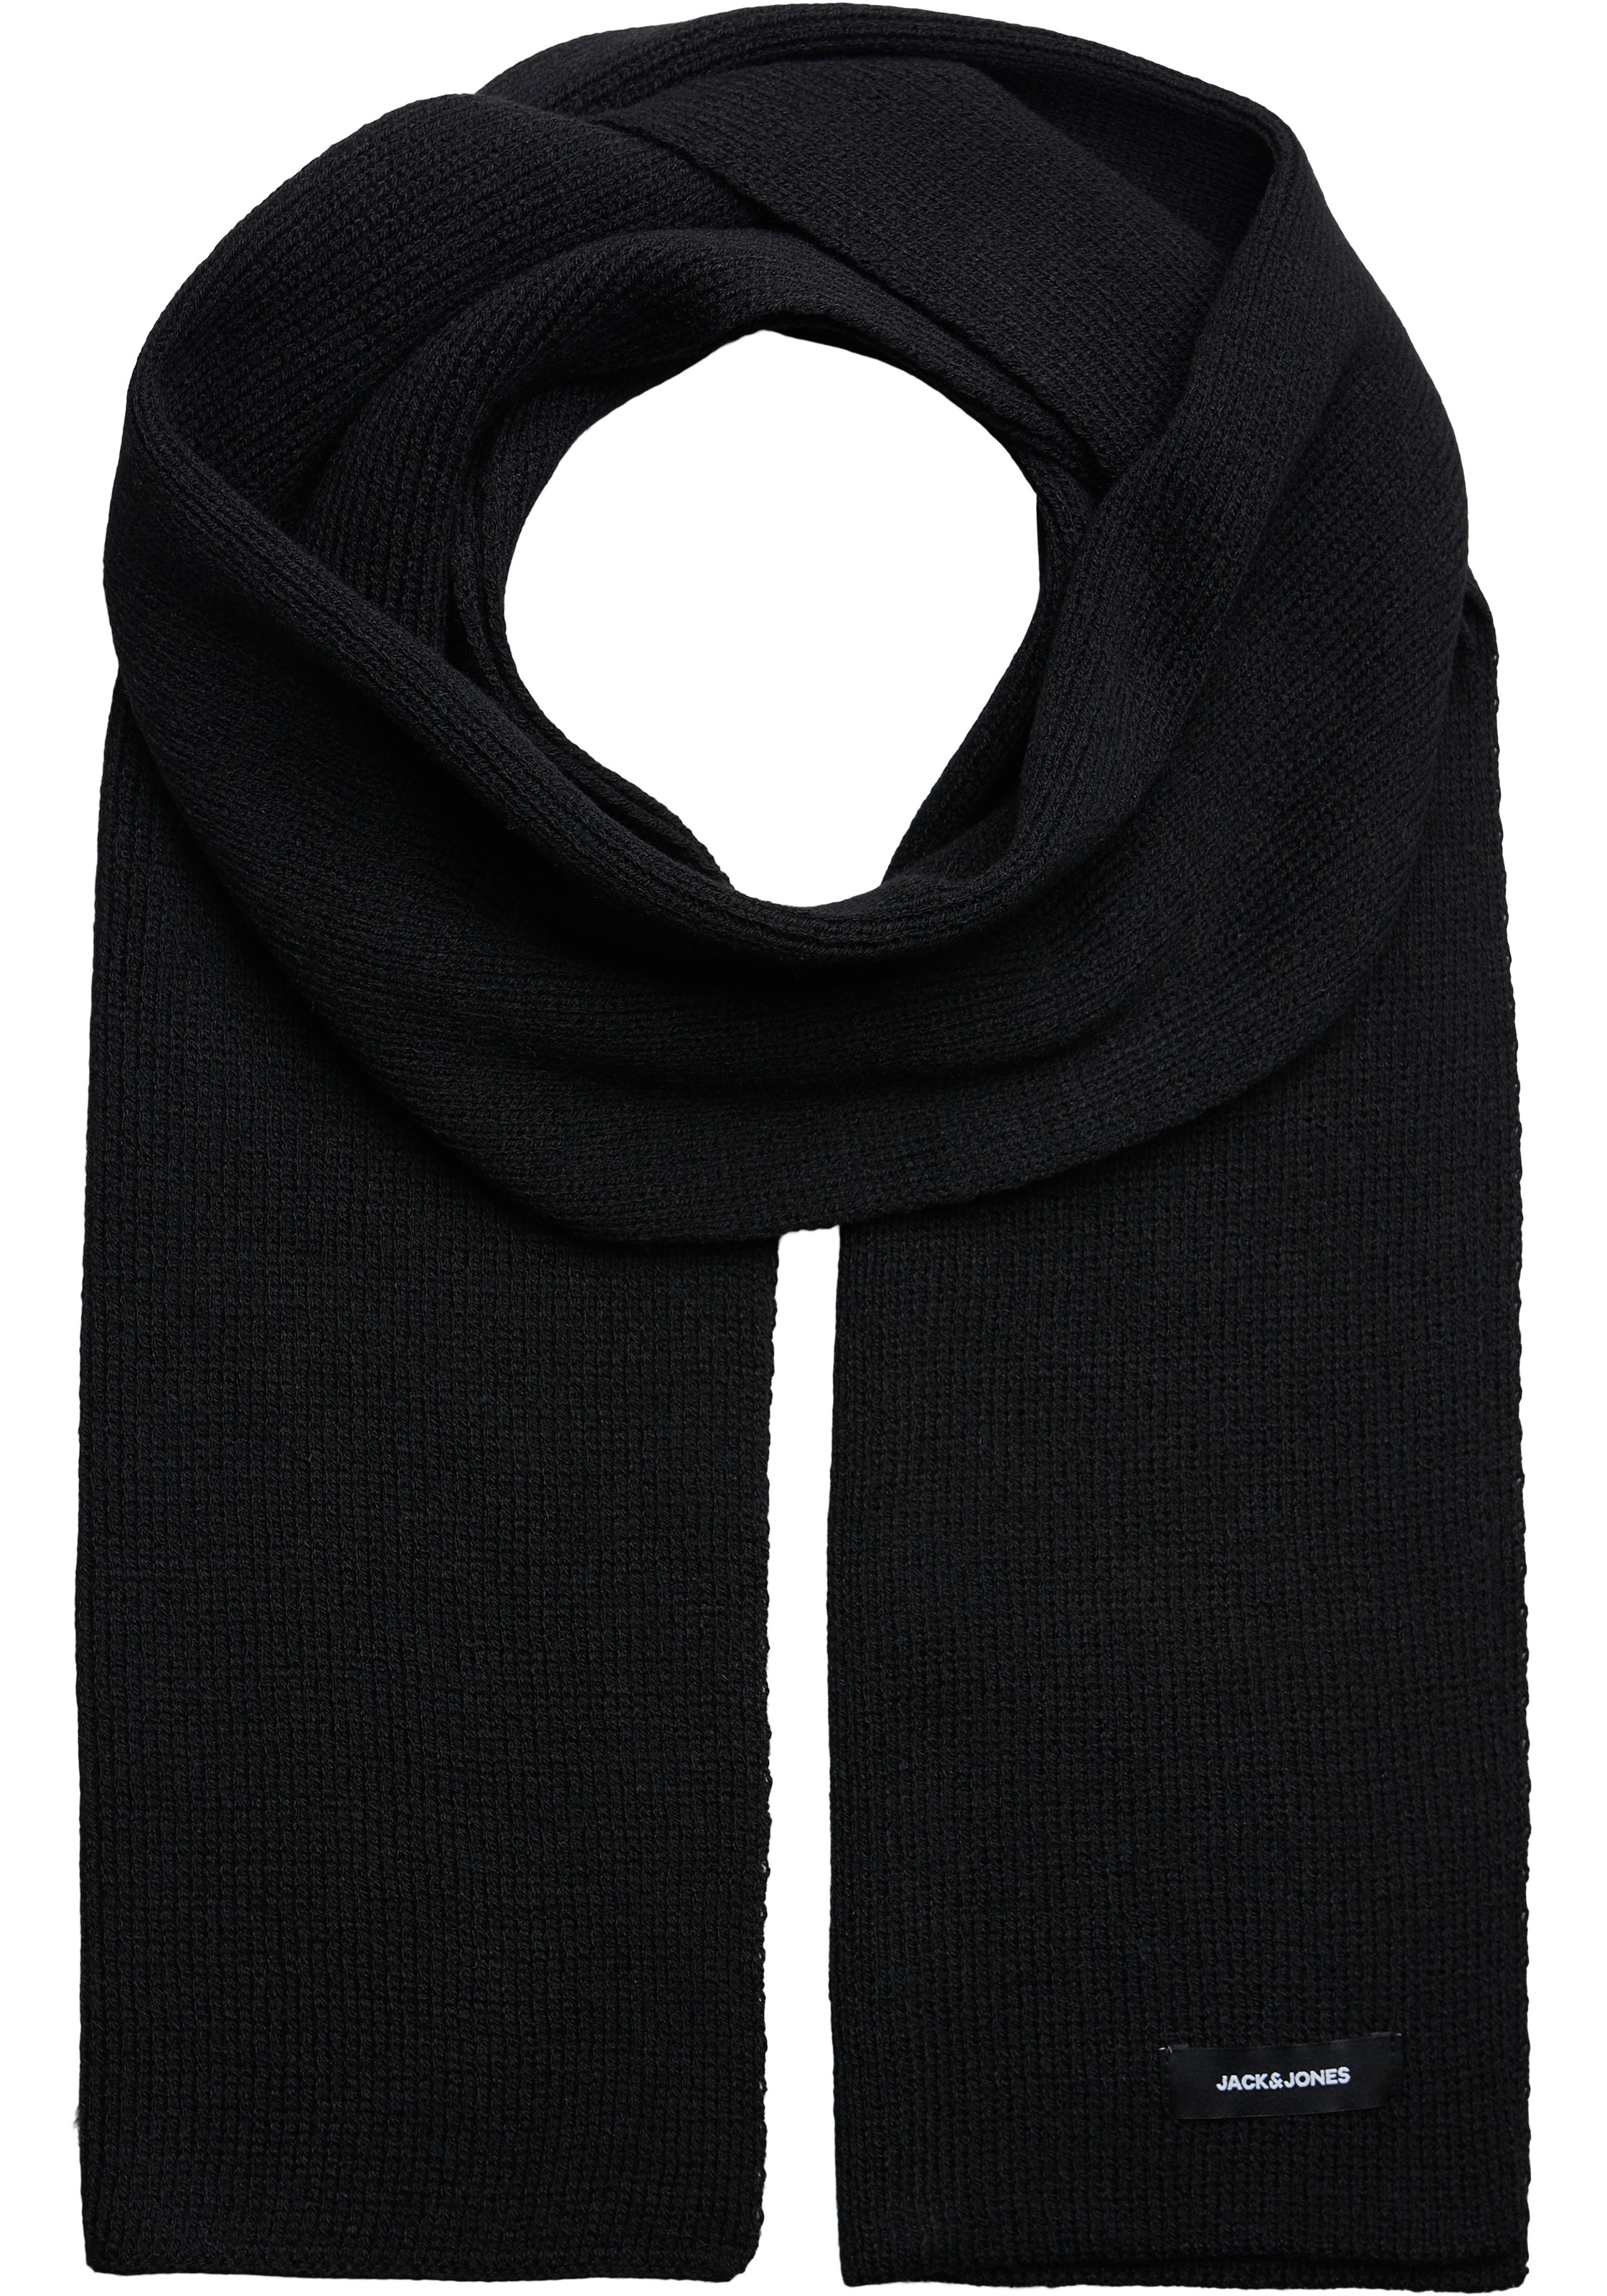 Jack & Jones knitted scarf-Black Black